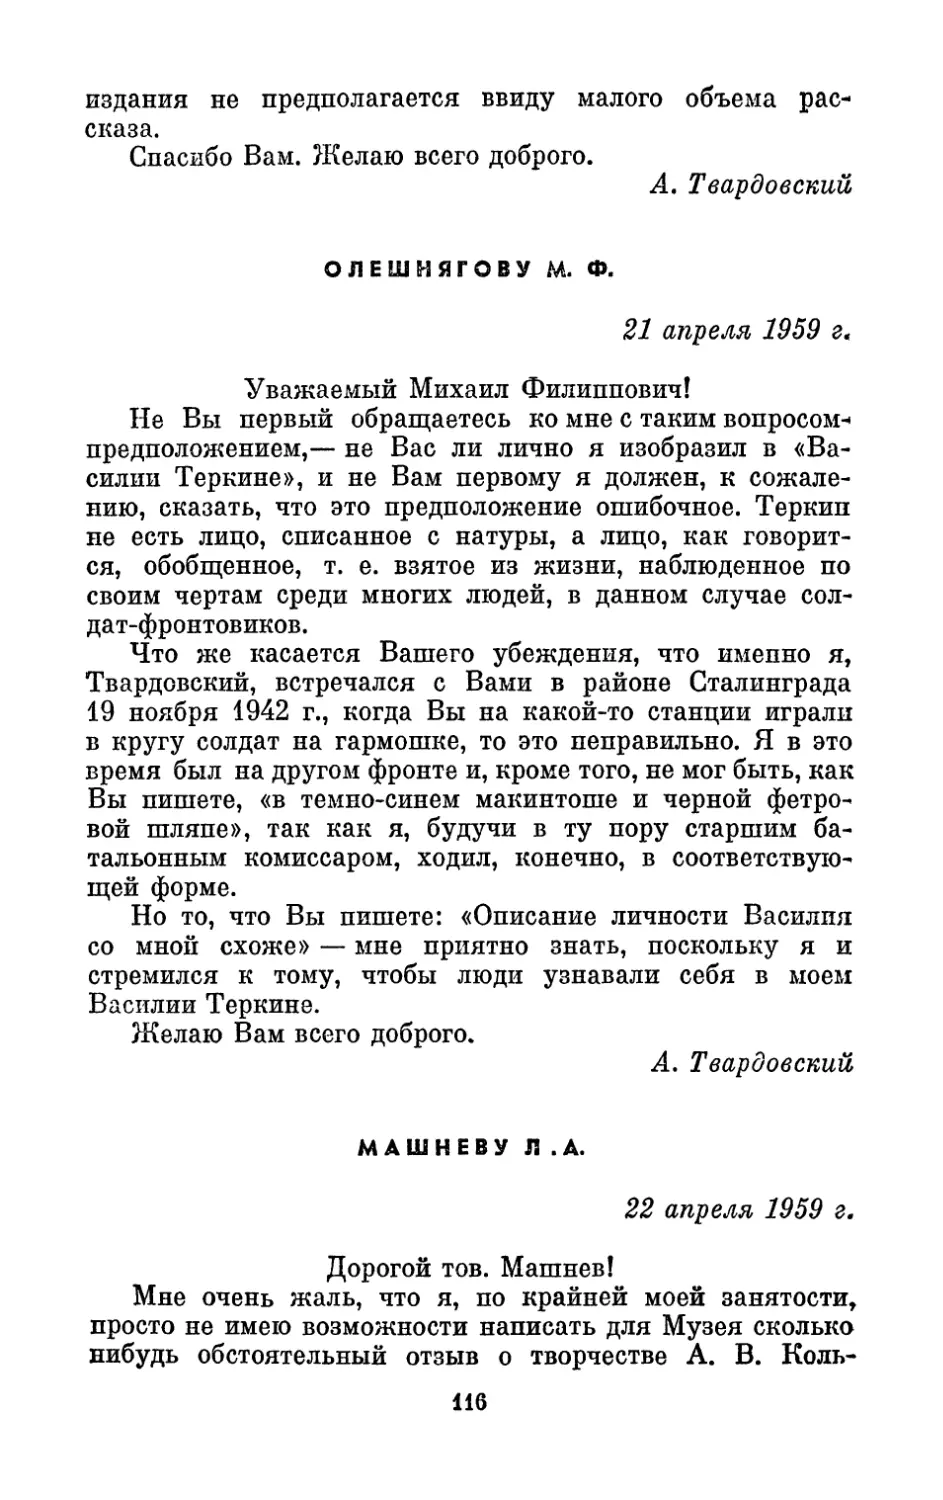 Олешнягову М. Ф., 21 апреля 1959 г.
Машневу Л. А., 22 апреля 1959 г.